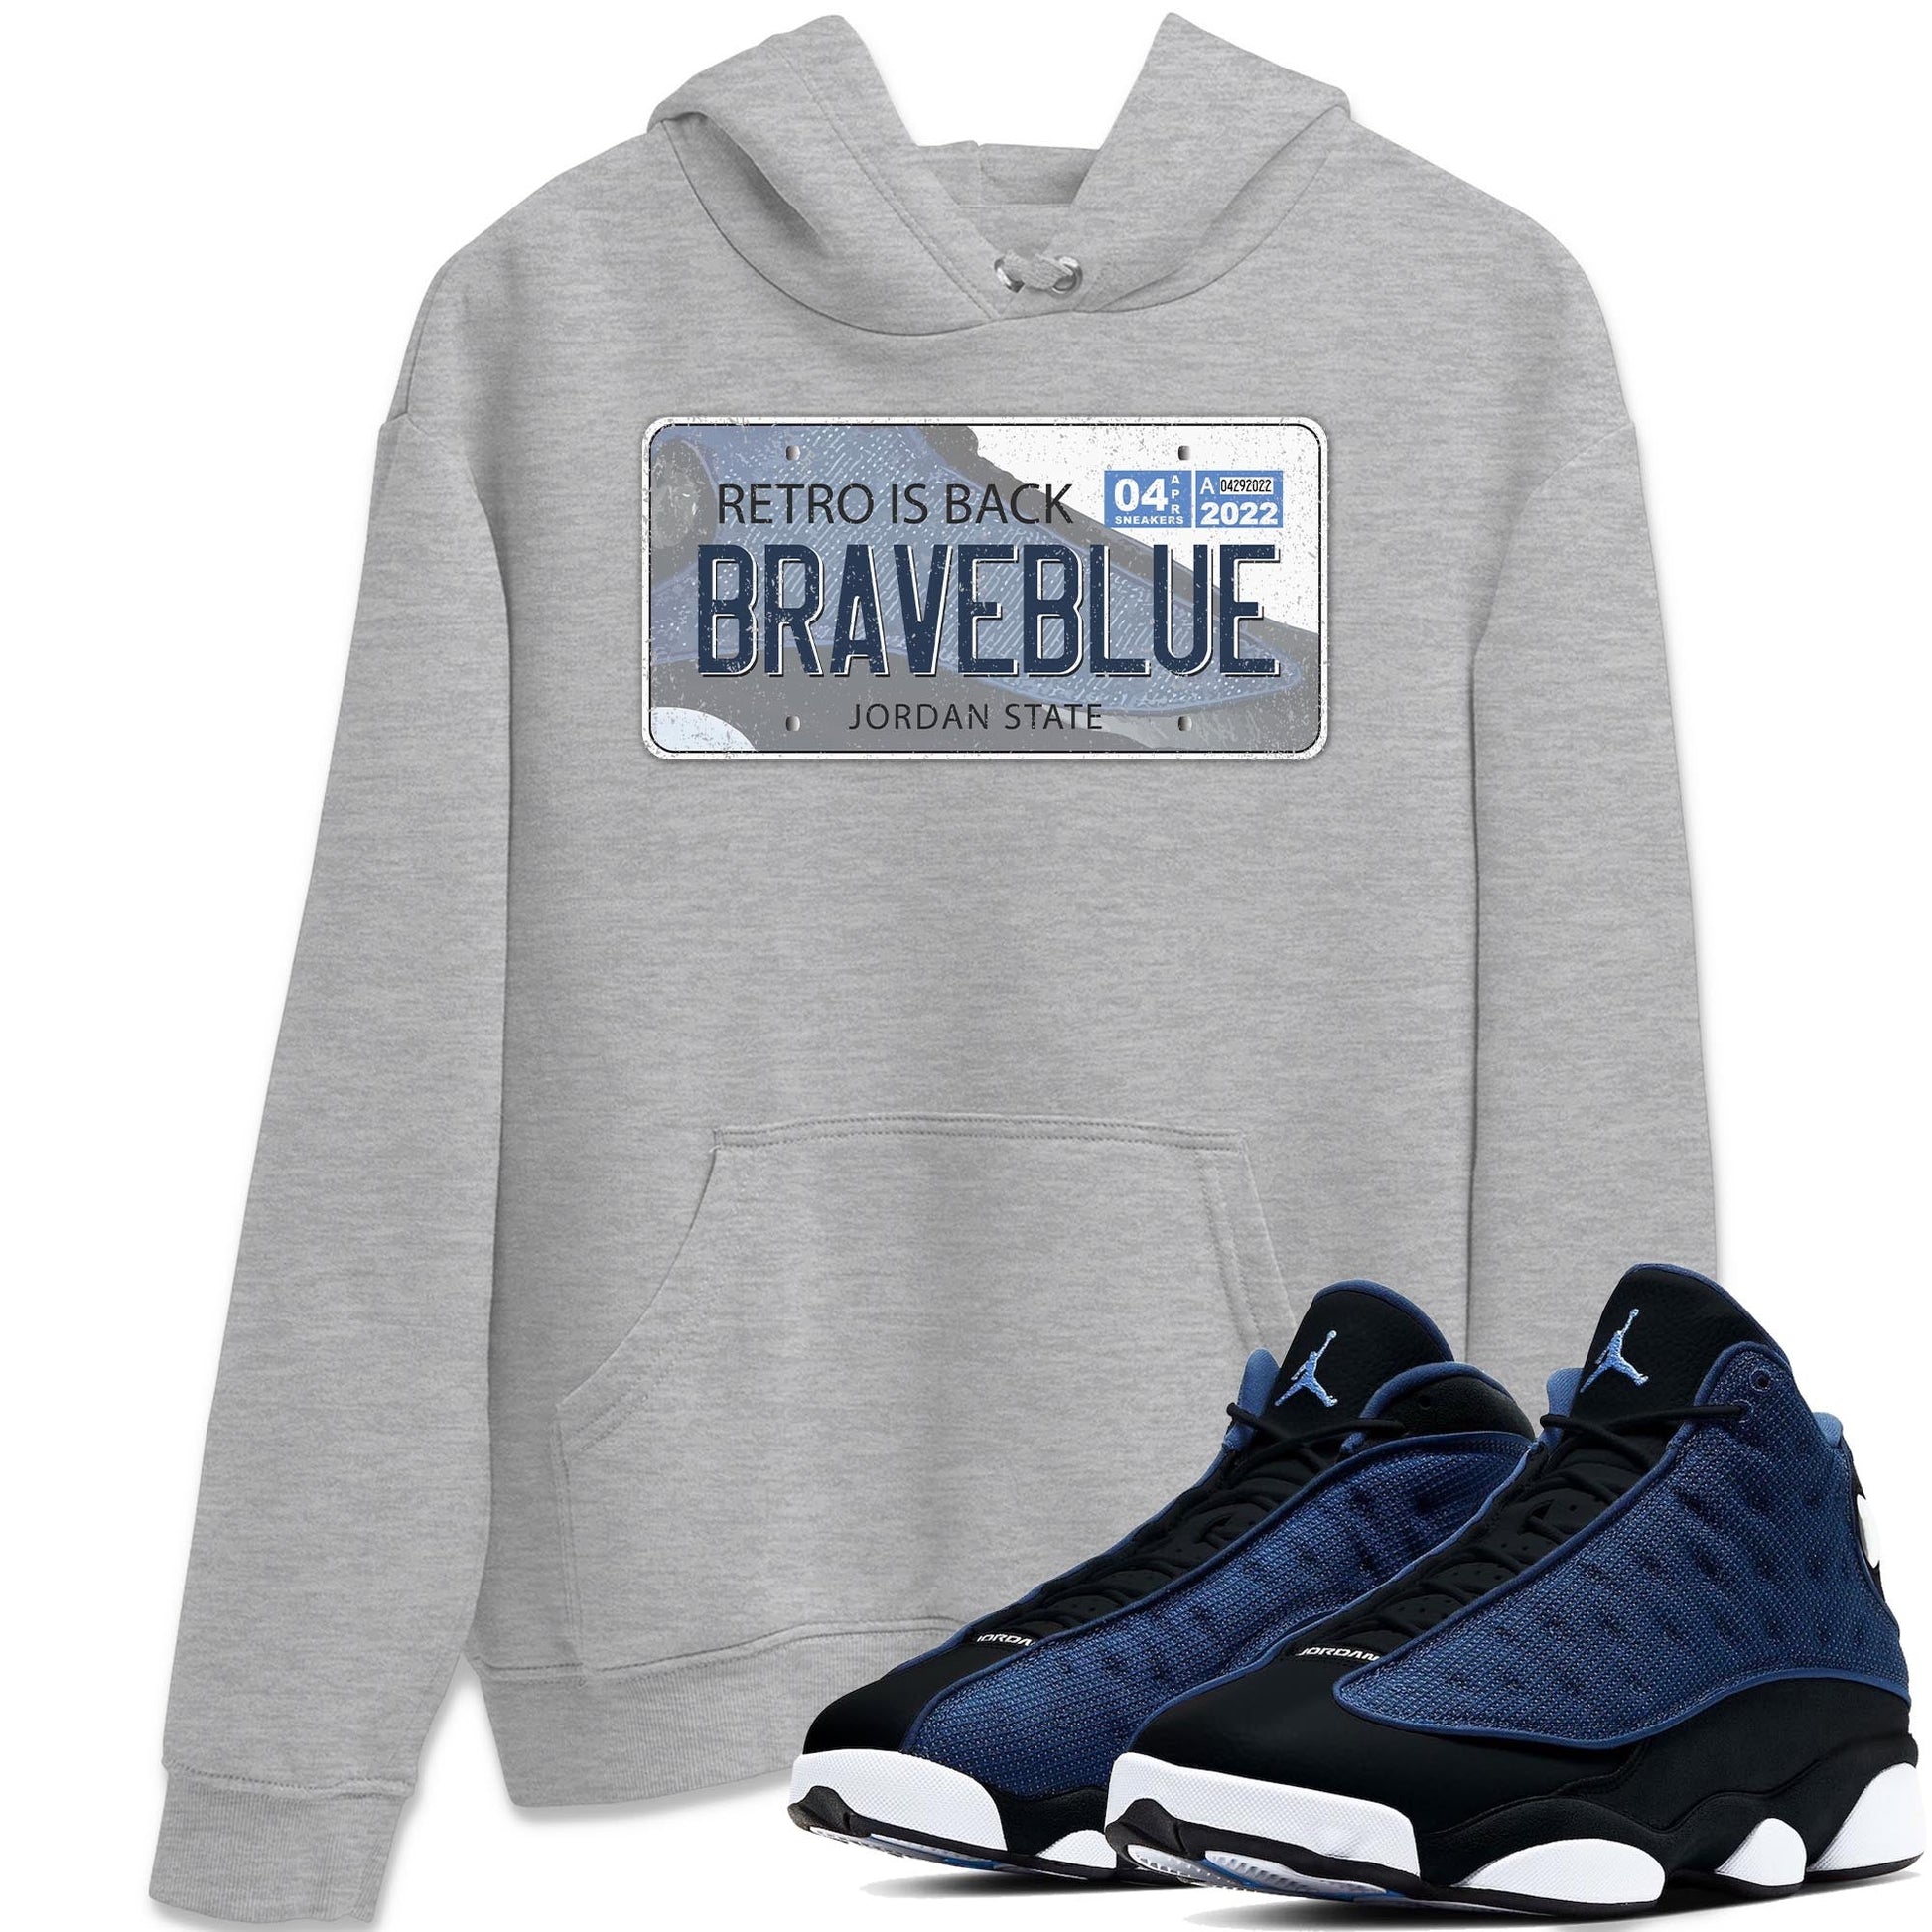 Jordan 13 Brave Blue Sneaker Match Tees Jordan Plate Sneaker Tees Jordan 13 Brave Blue Sneaker Release Tees Unisex Shirts